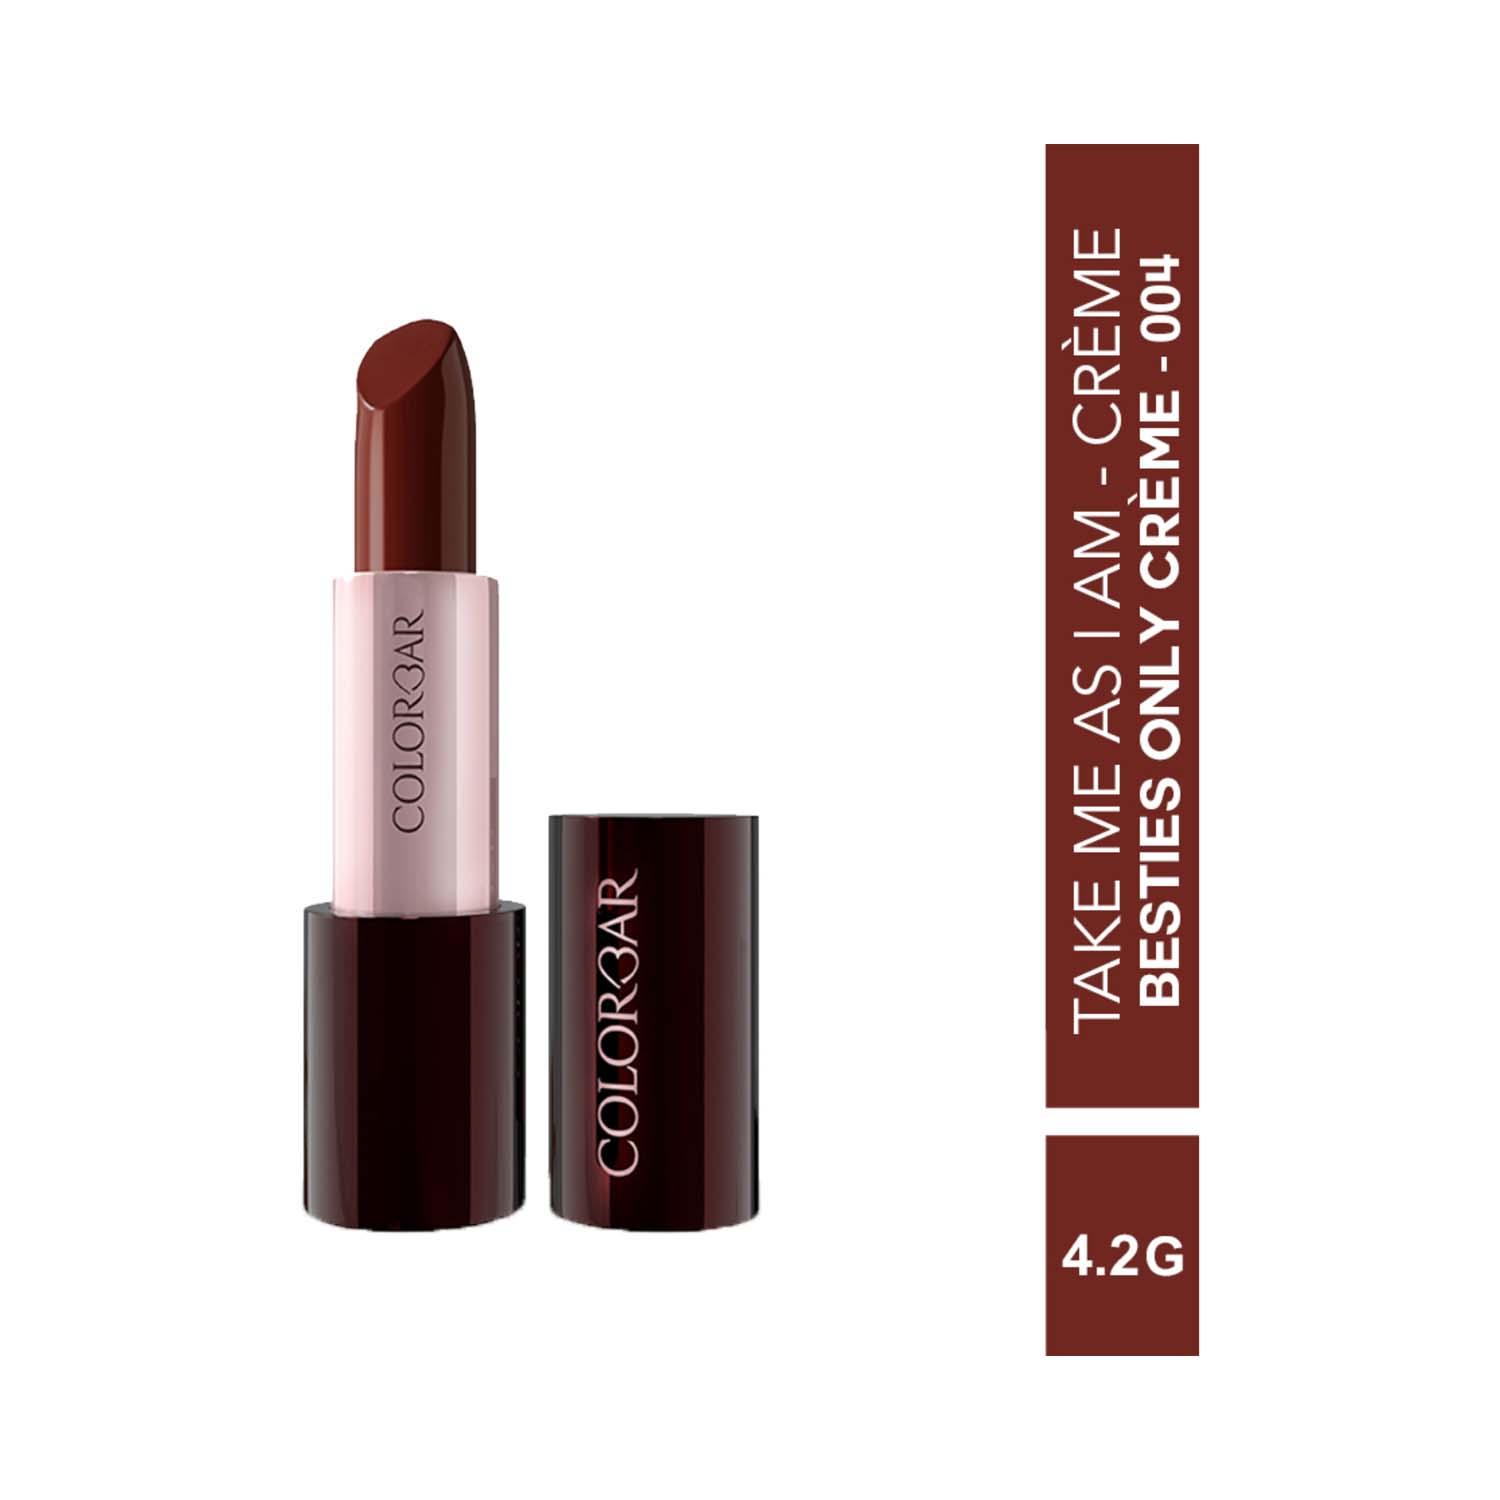 Colorbar | Colorbar Take Me As I Am Vegan Creme Lipstick - Besties Only Creme - [004] (4.2 g)